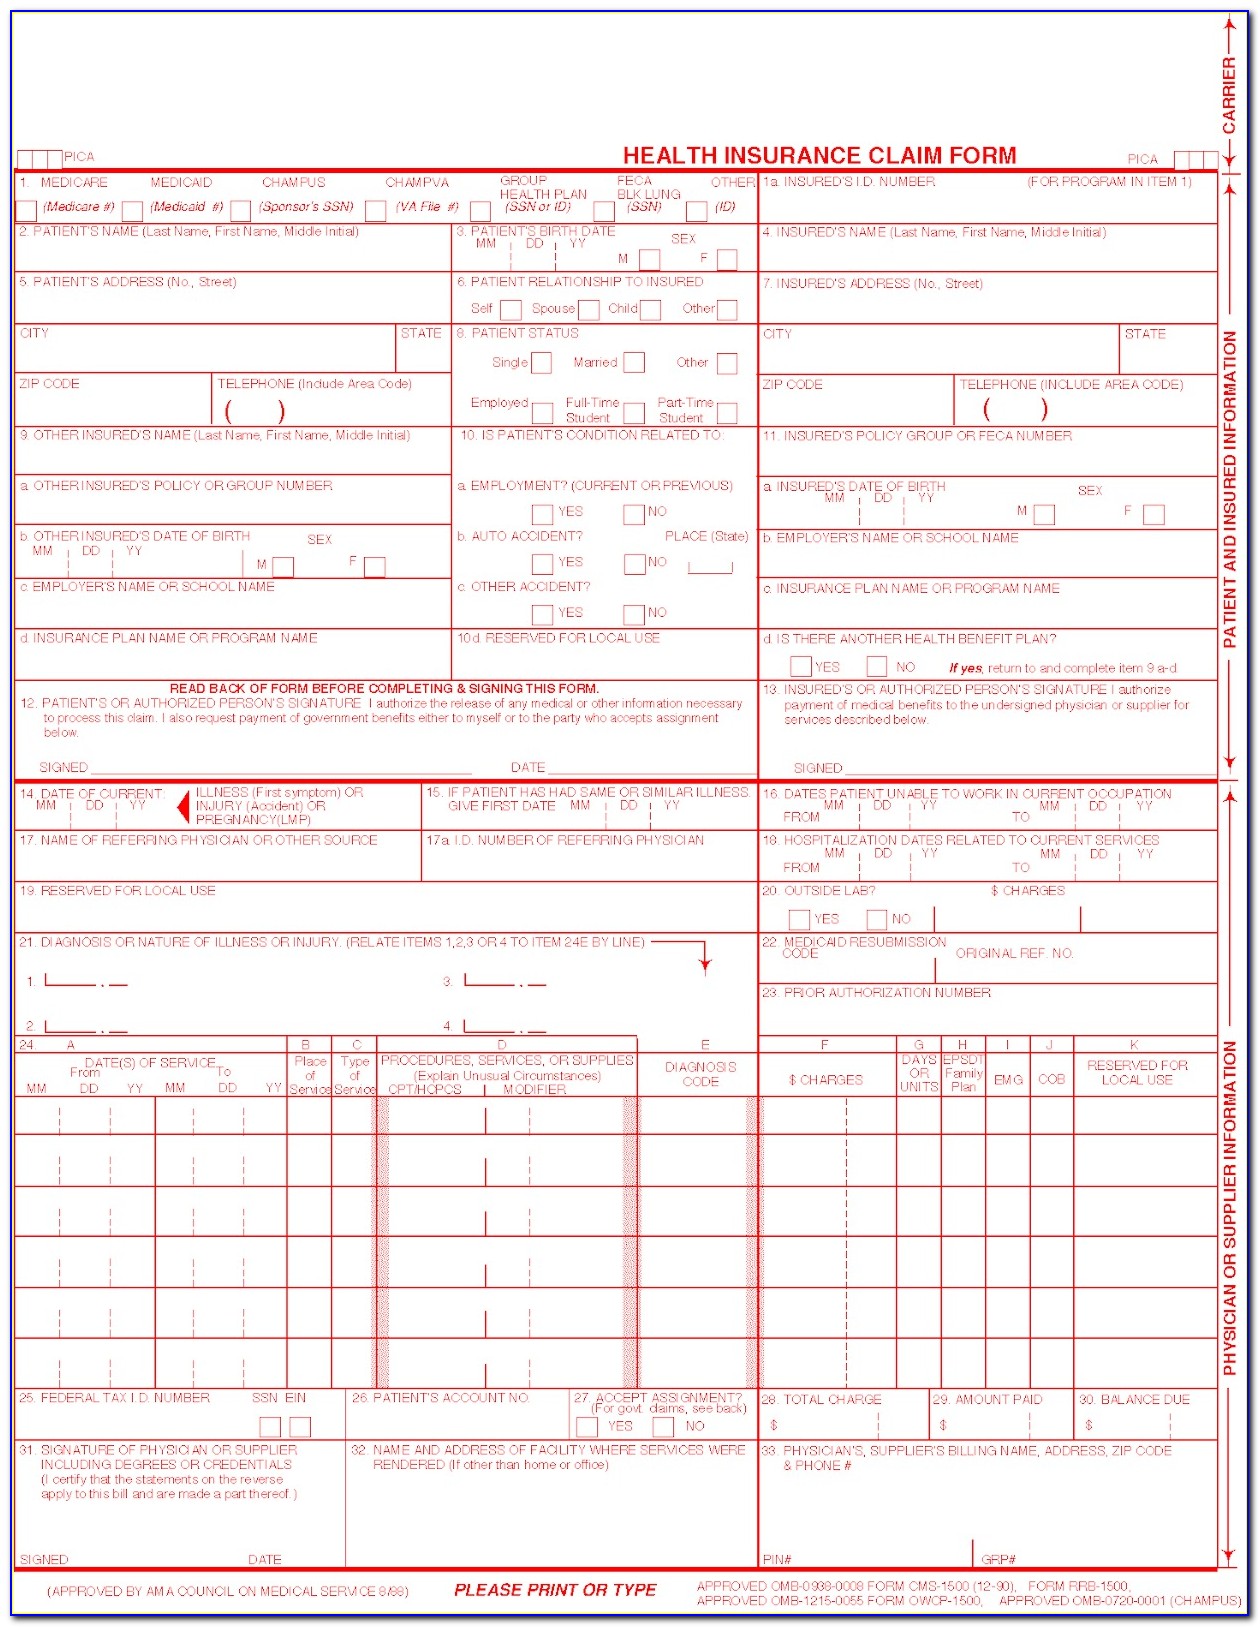 Hcfa 1500 Form Instructions 2016